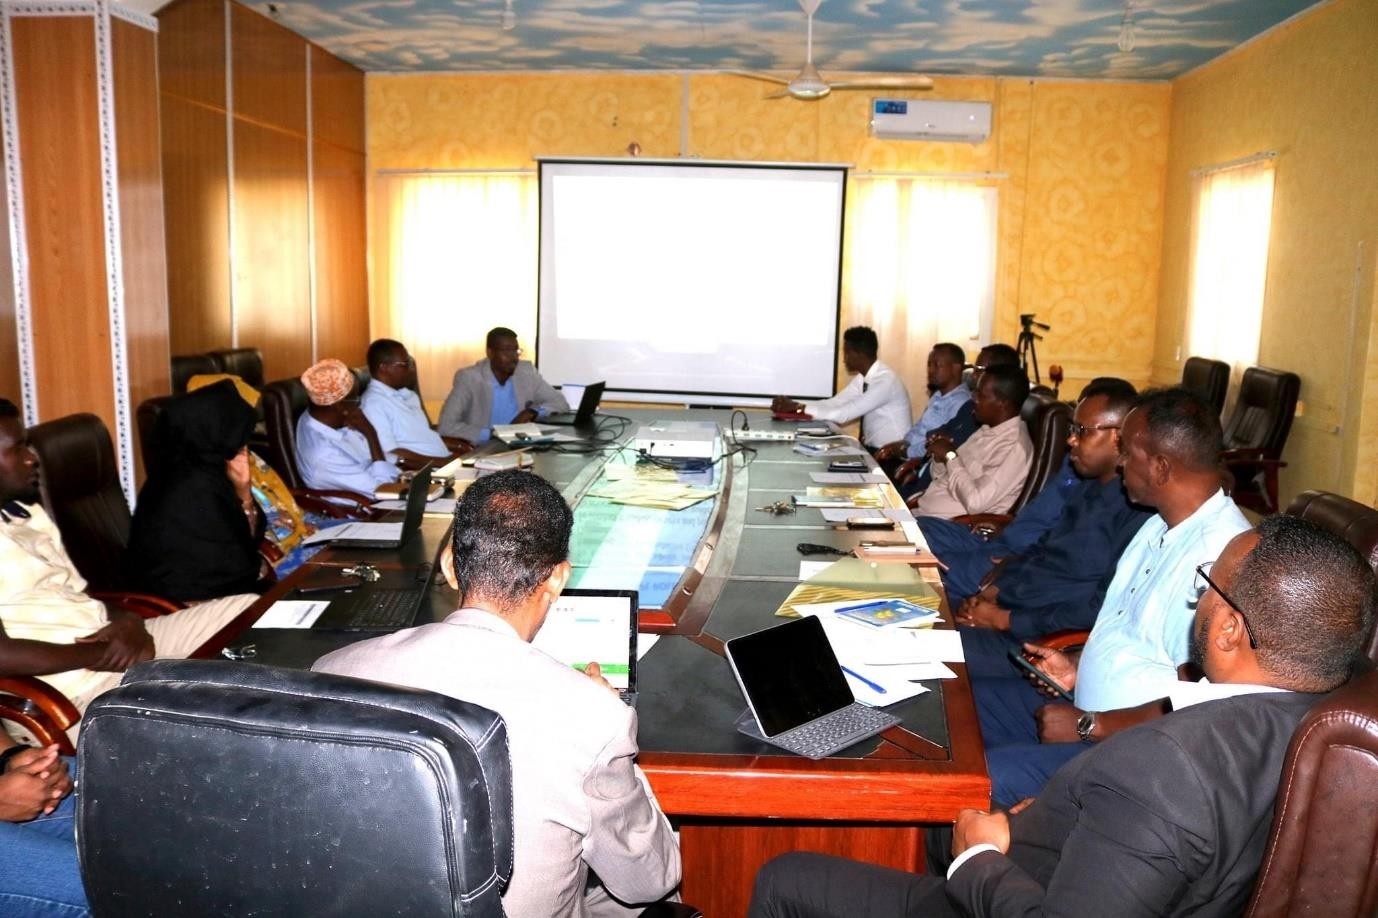 UN-Habitat organised Somali Mayor’s Forum held in Rwanda fuels Municipal reforms in Puntland